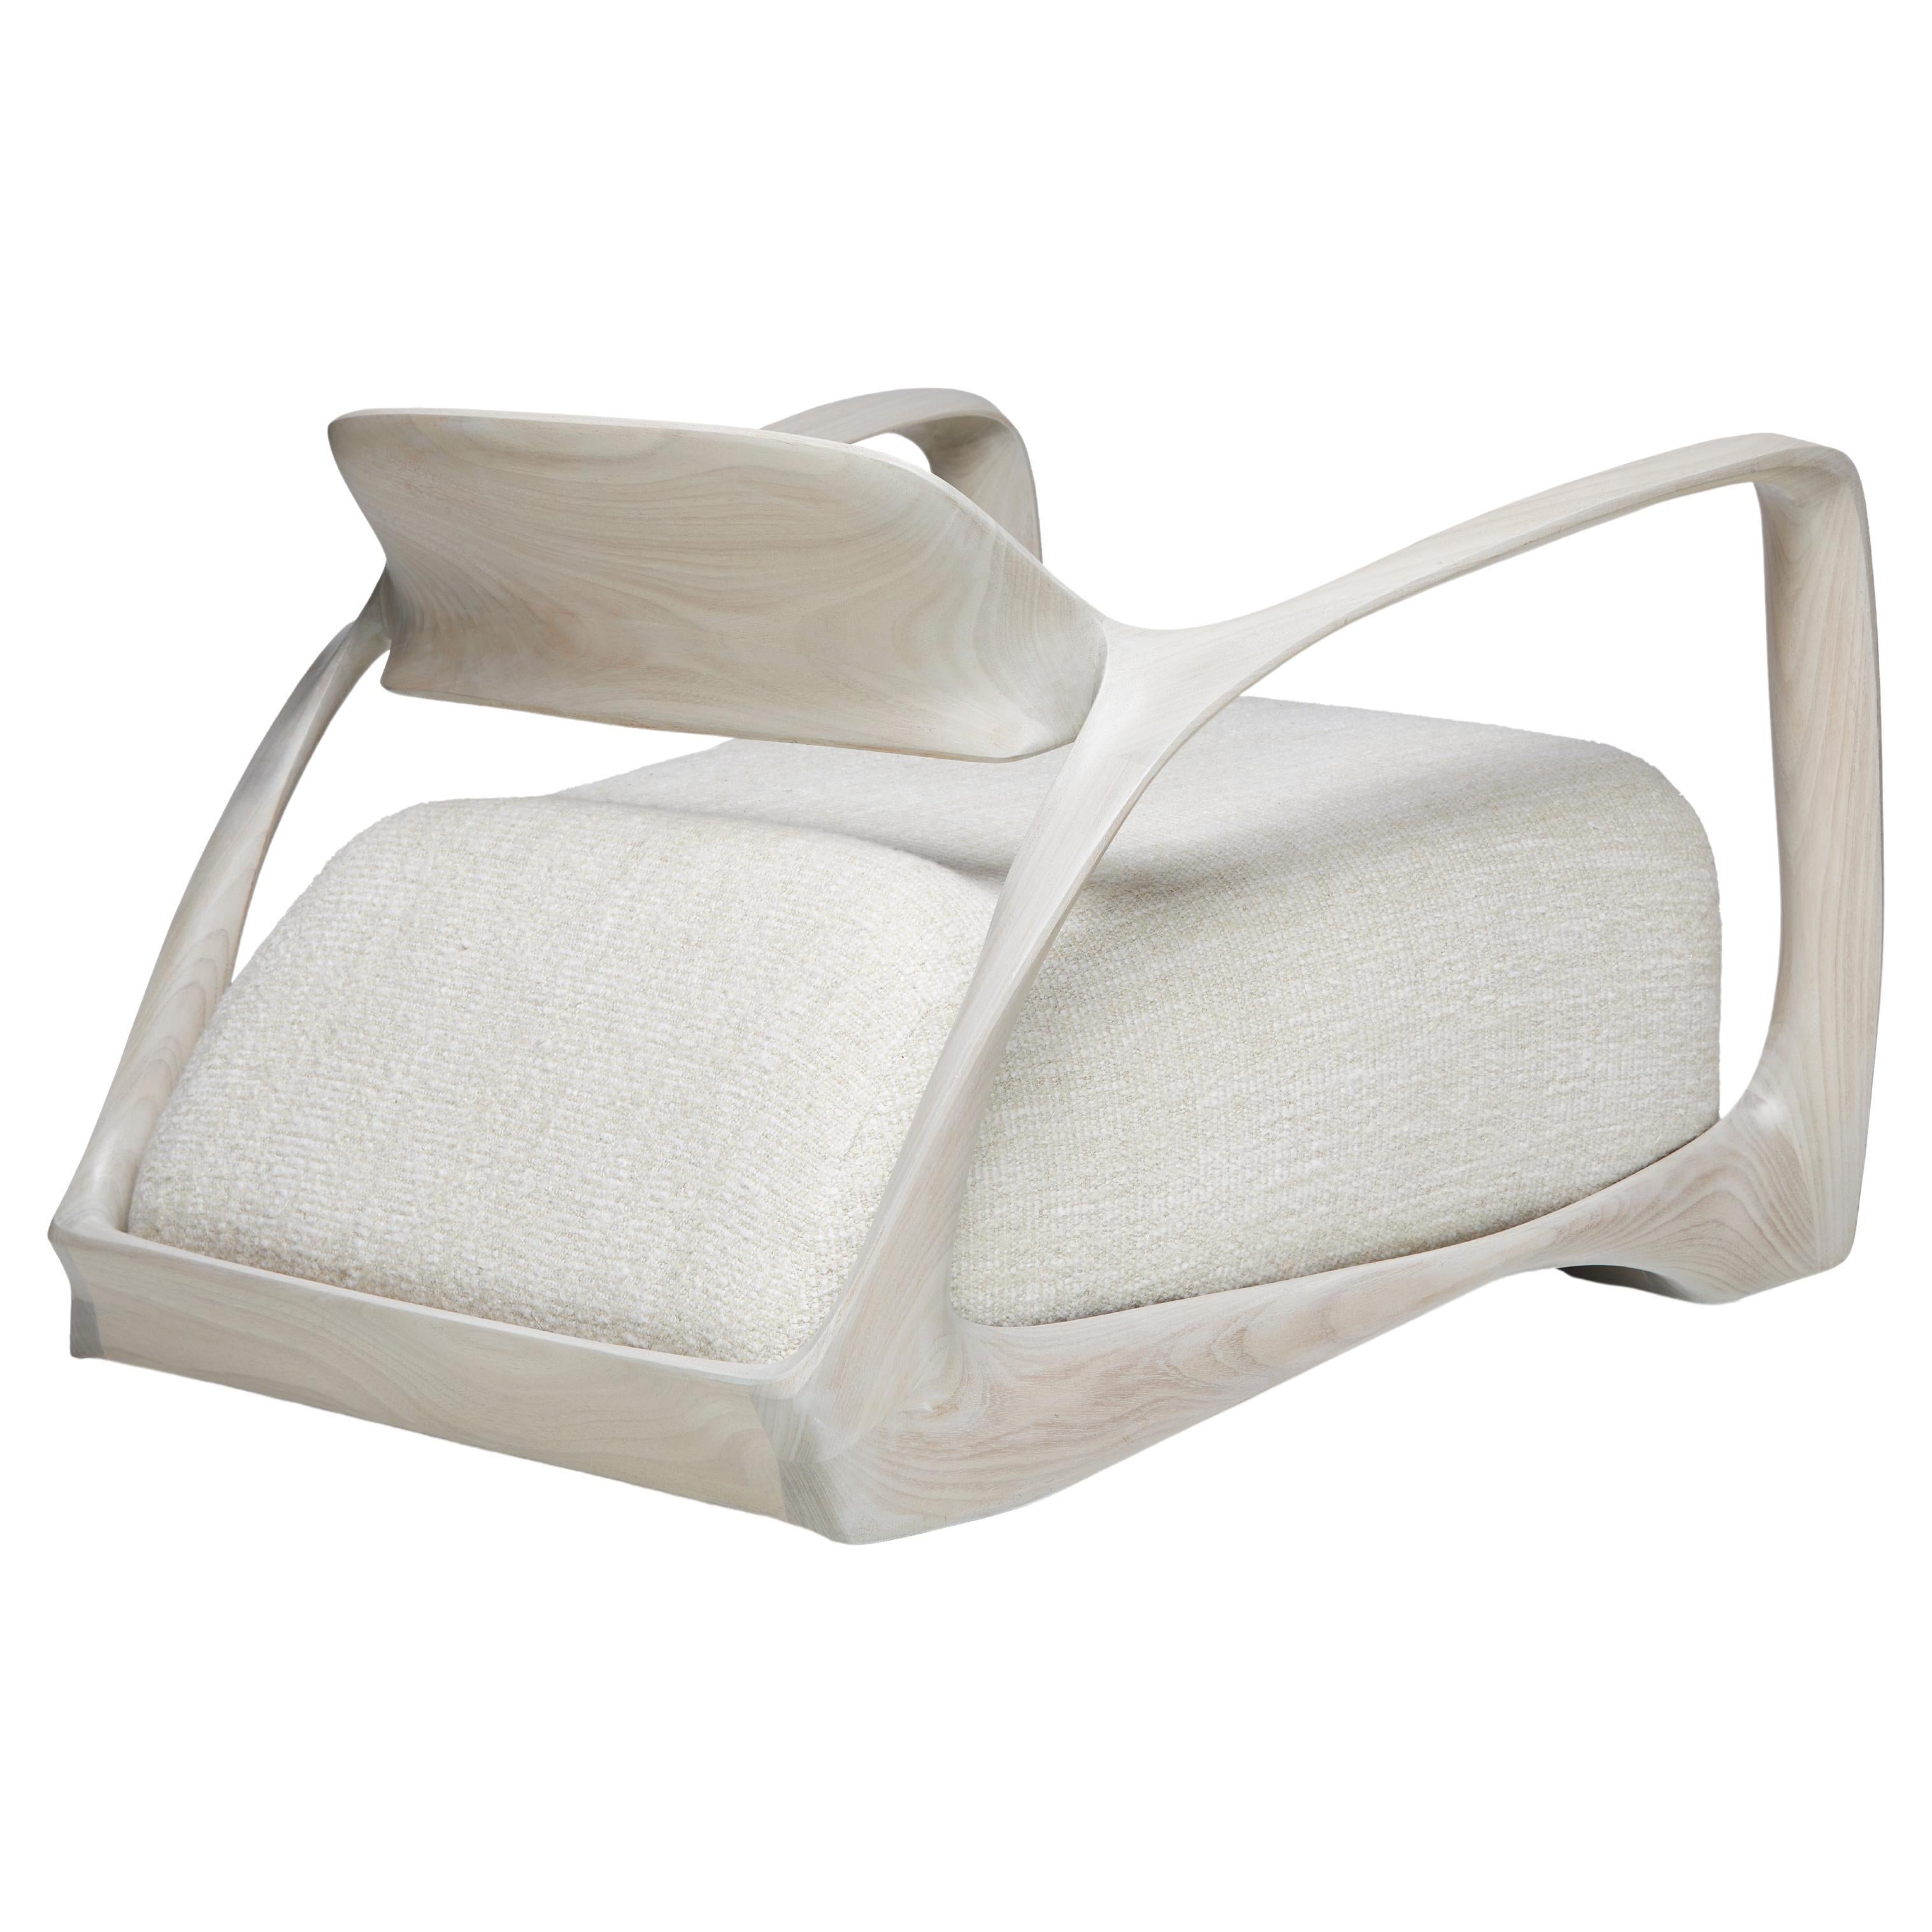 "Modell 2" - Contemporary Sculptural Cerused Lounge Chair - Einzigartiges Modernes Design